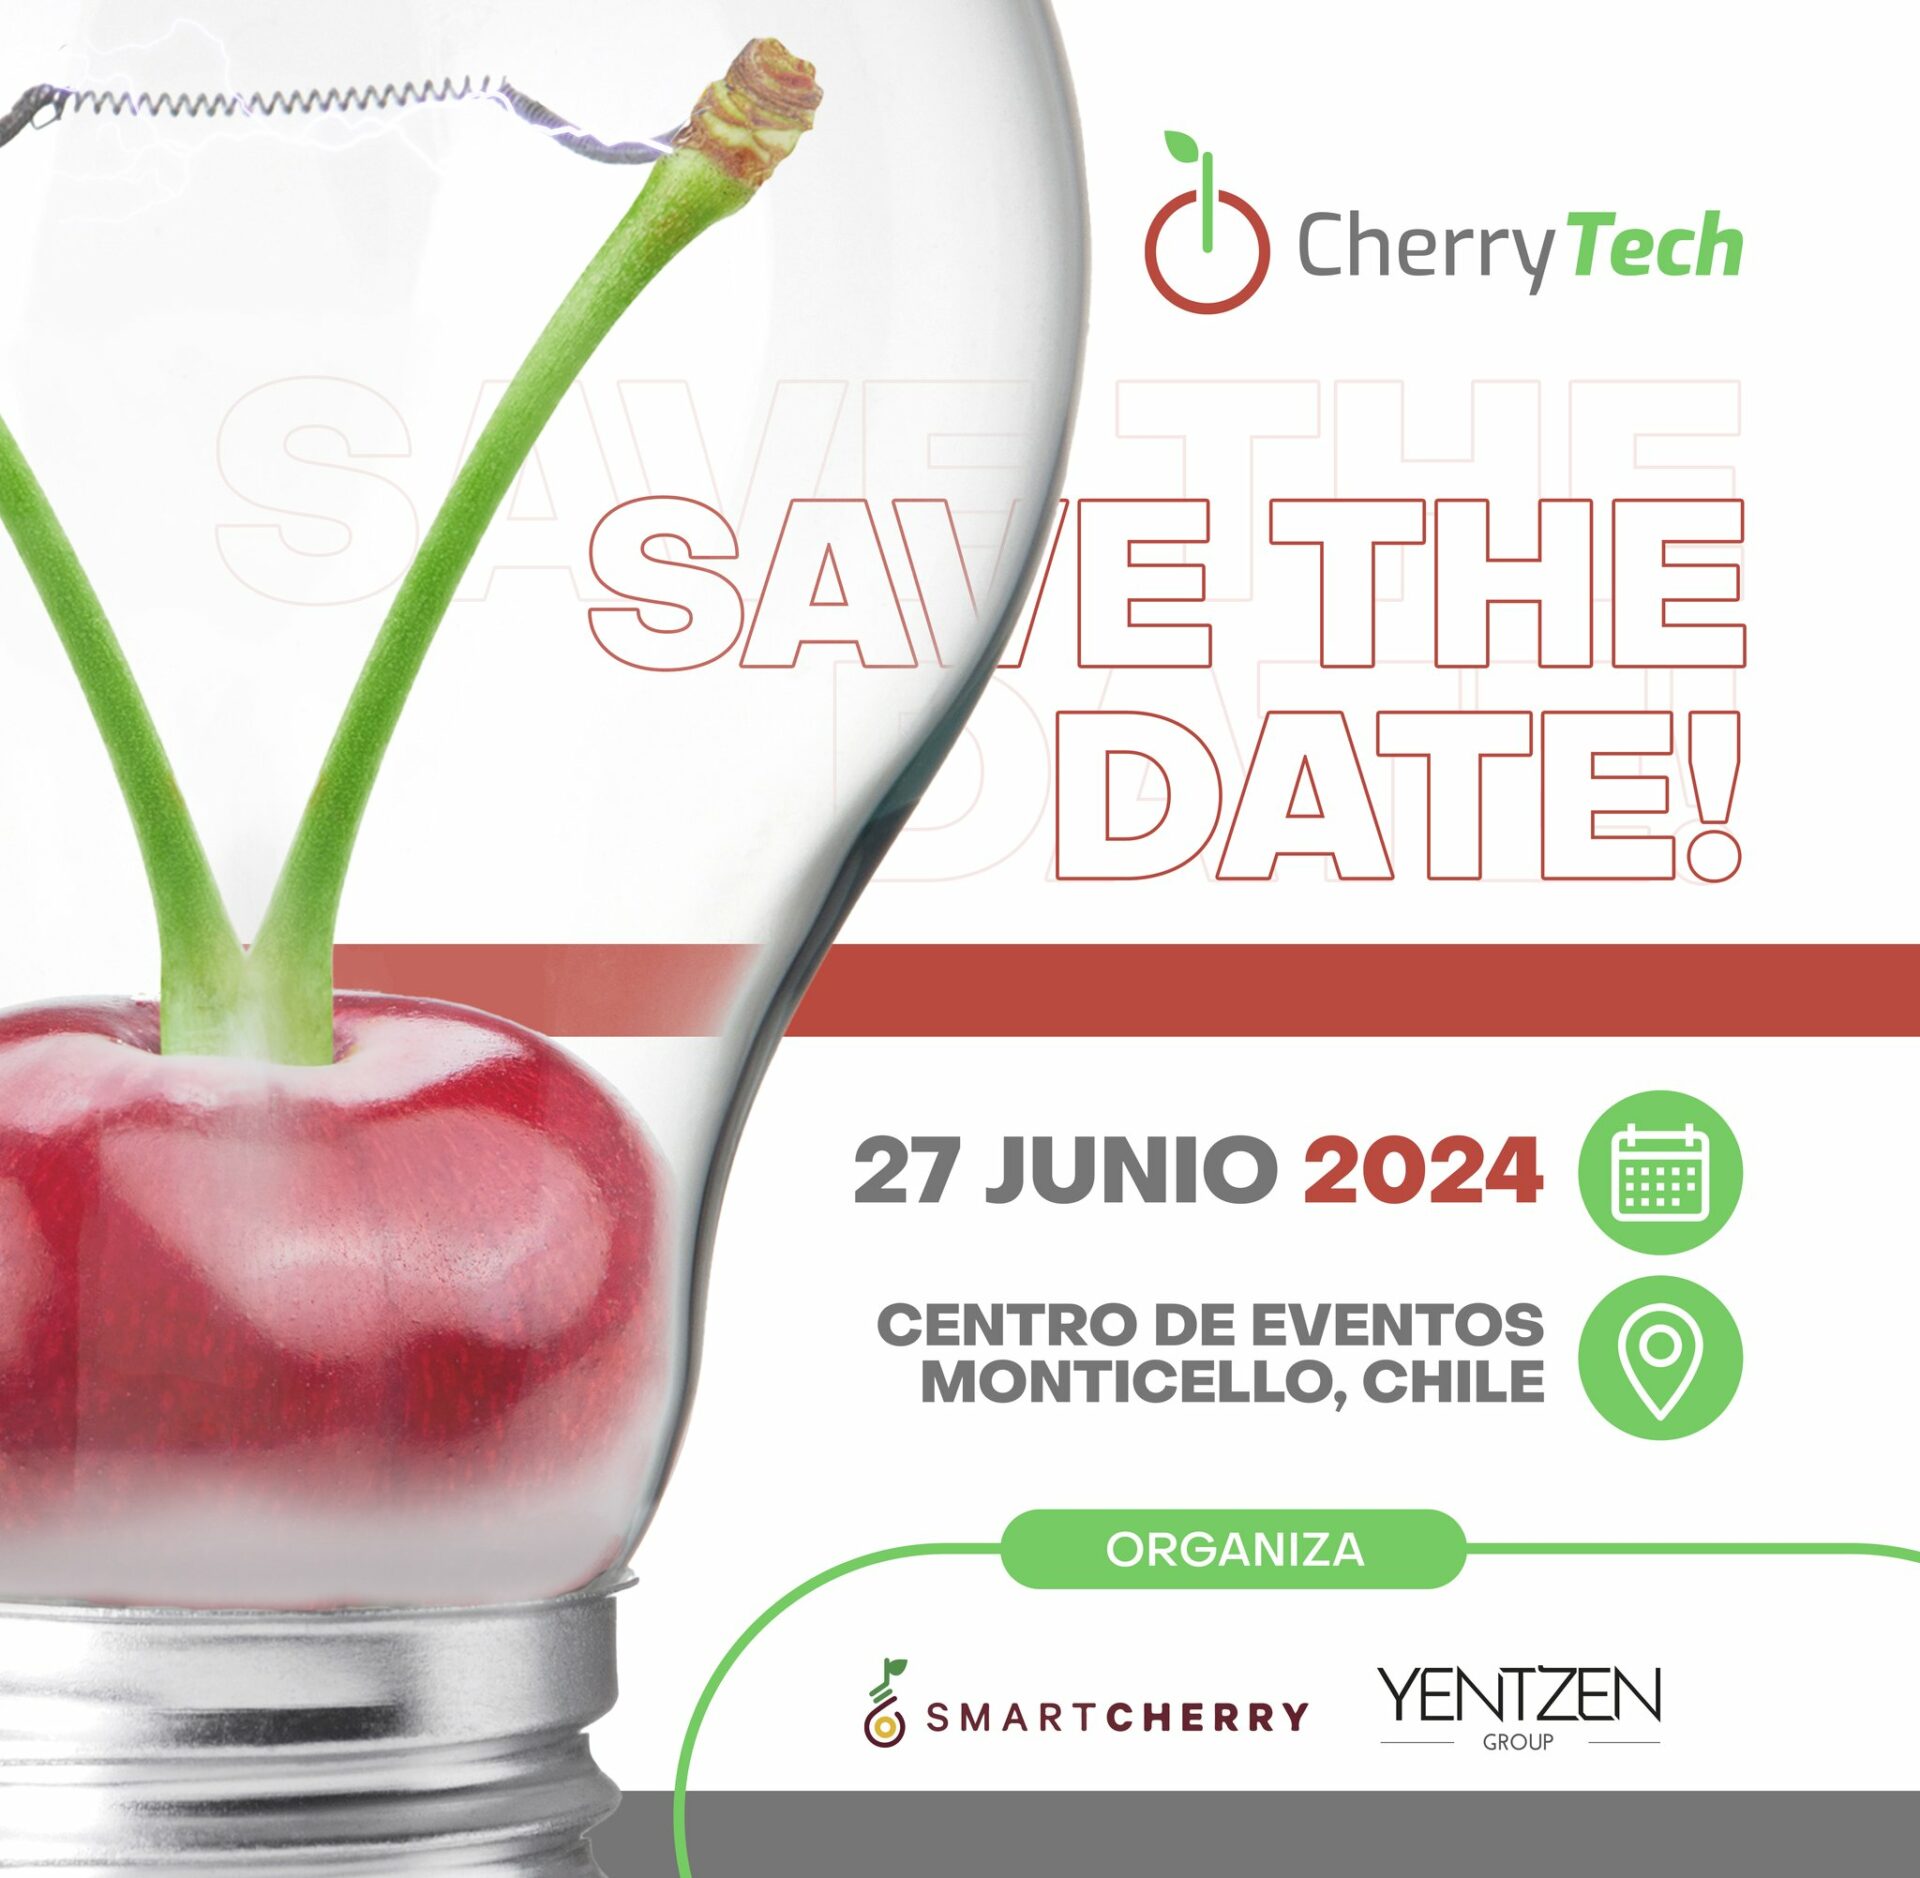 Cherry Tech Smartcherry